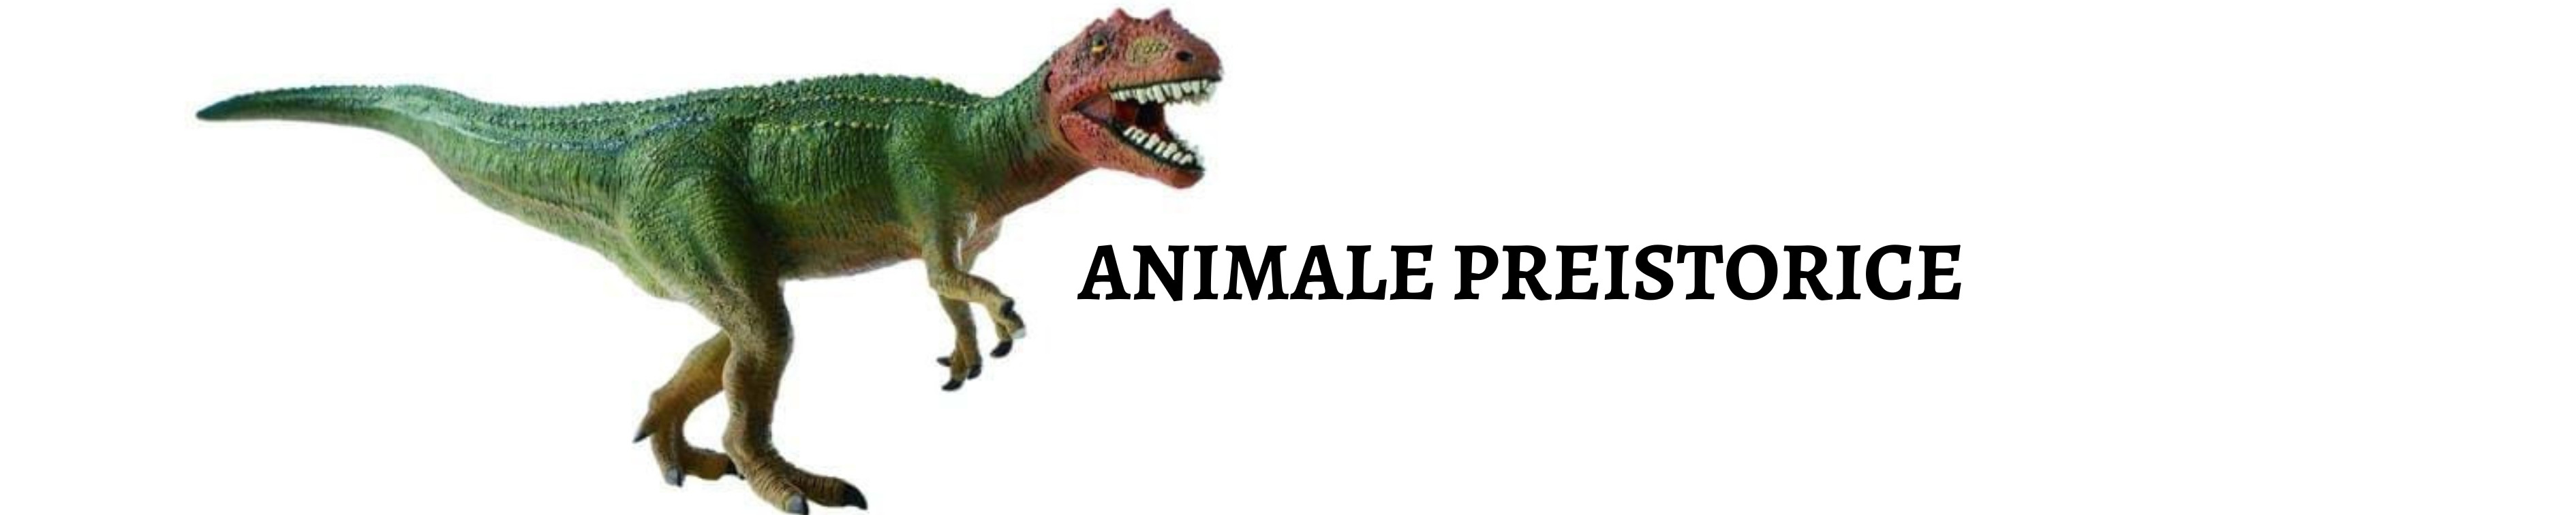 Animale preistorice